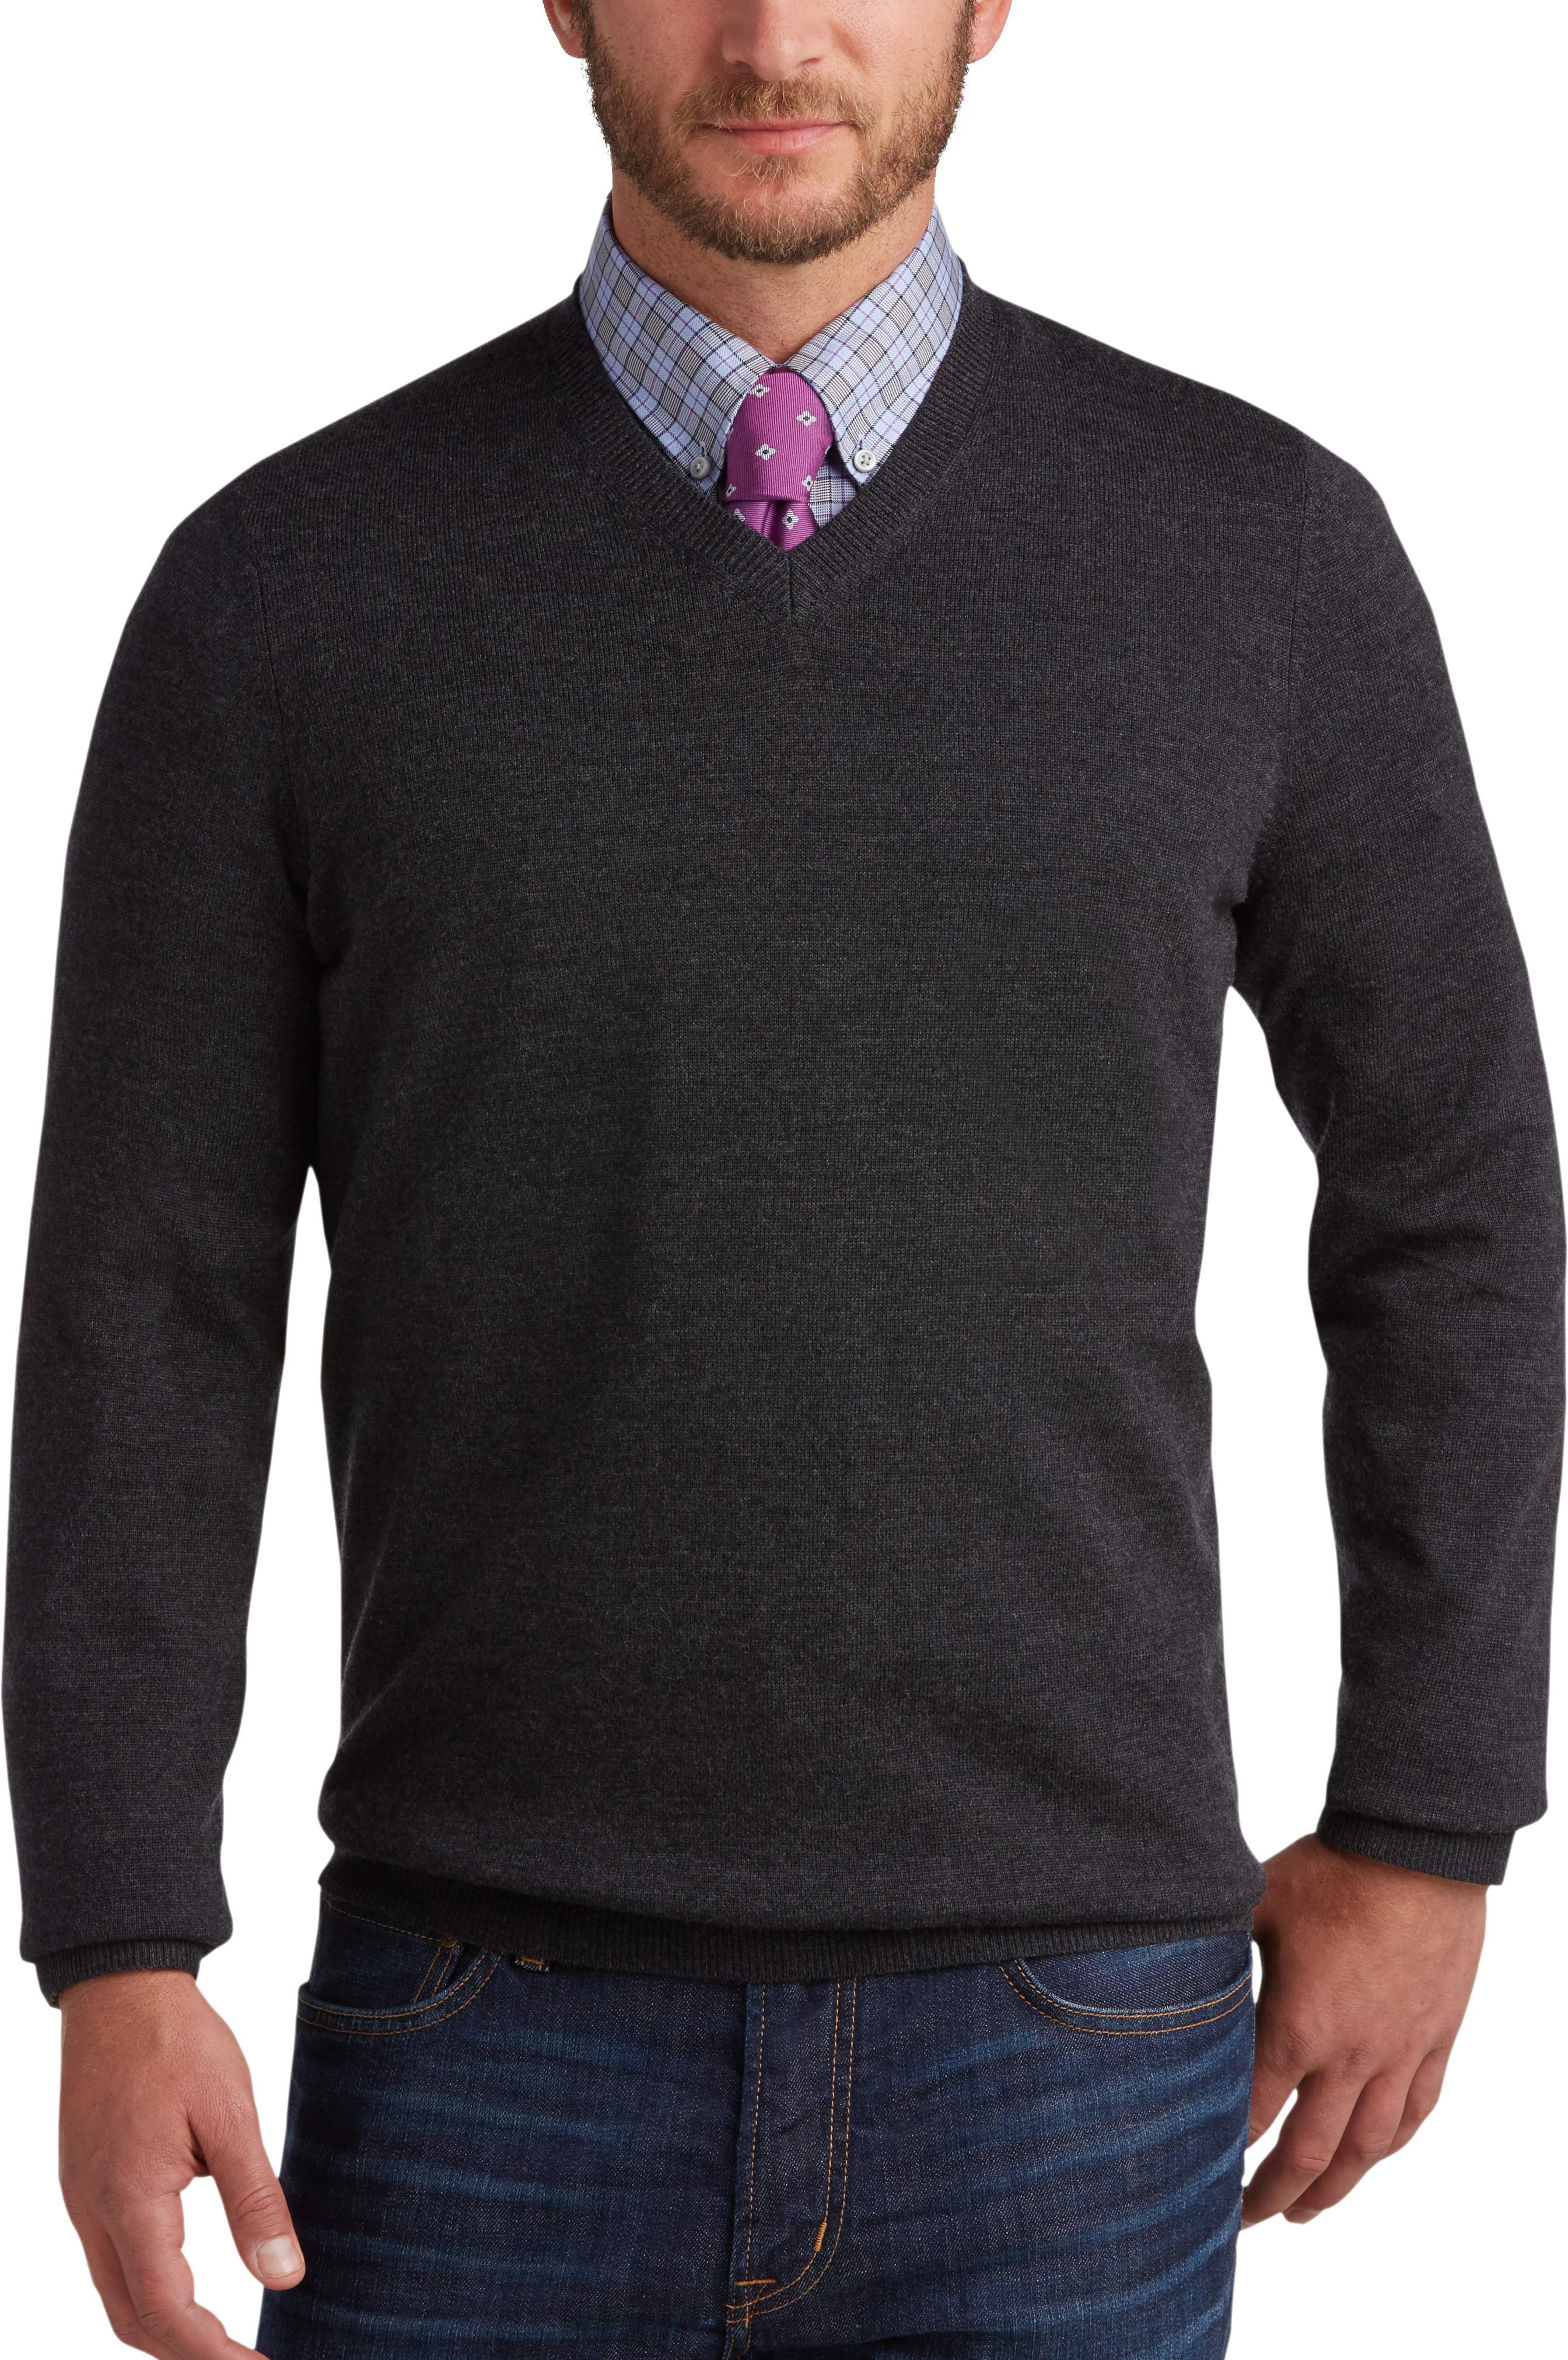 Joseph Abboud Charcoal V-Neck Merino Wool Sweater - Men's Sale | Men's ...